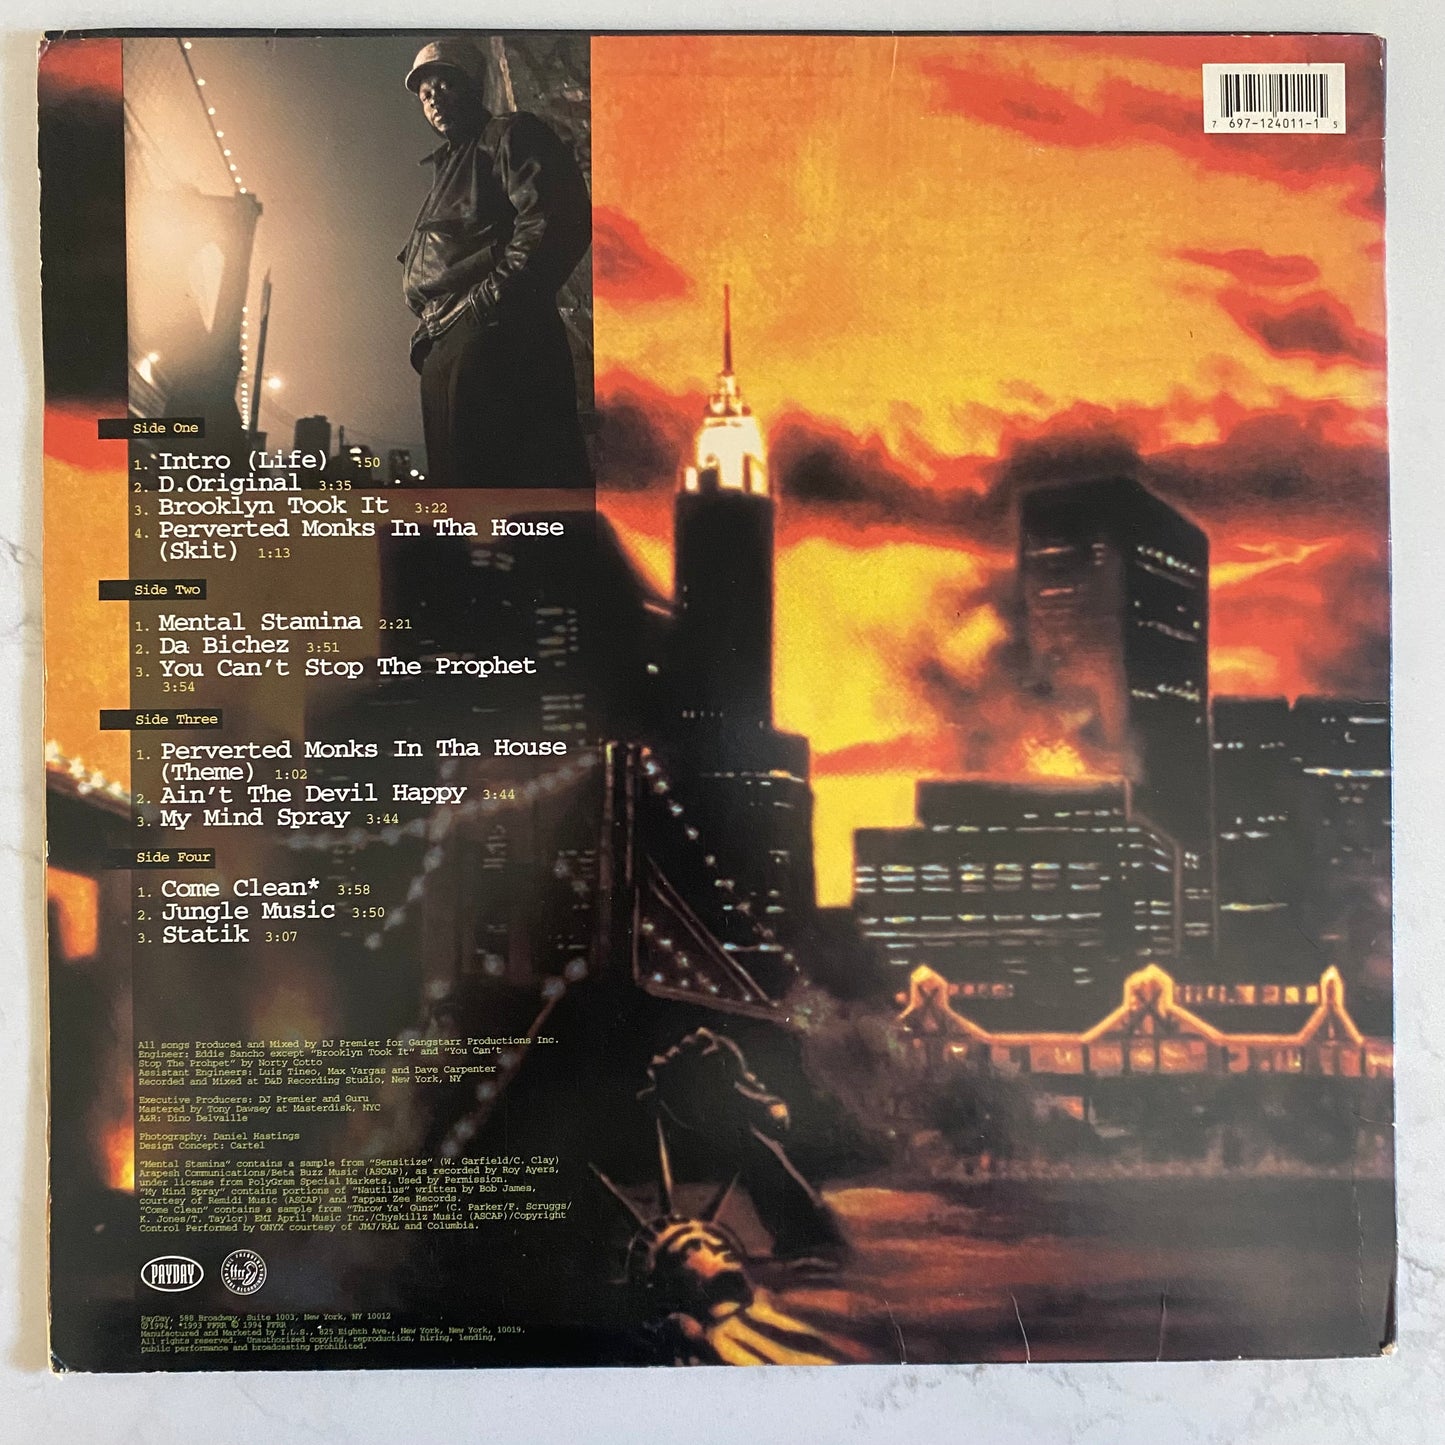 Jeru The Damaja - The Sun Rises In The East (2xLP, Album, Ltd).  HIP-HOP